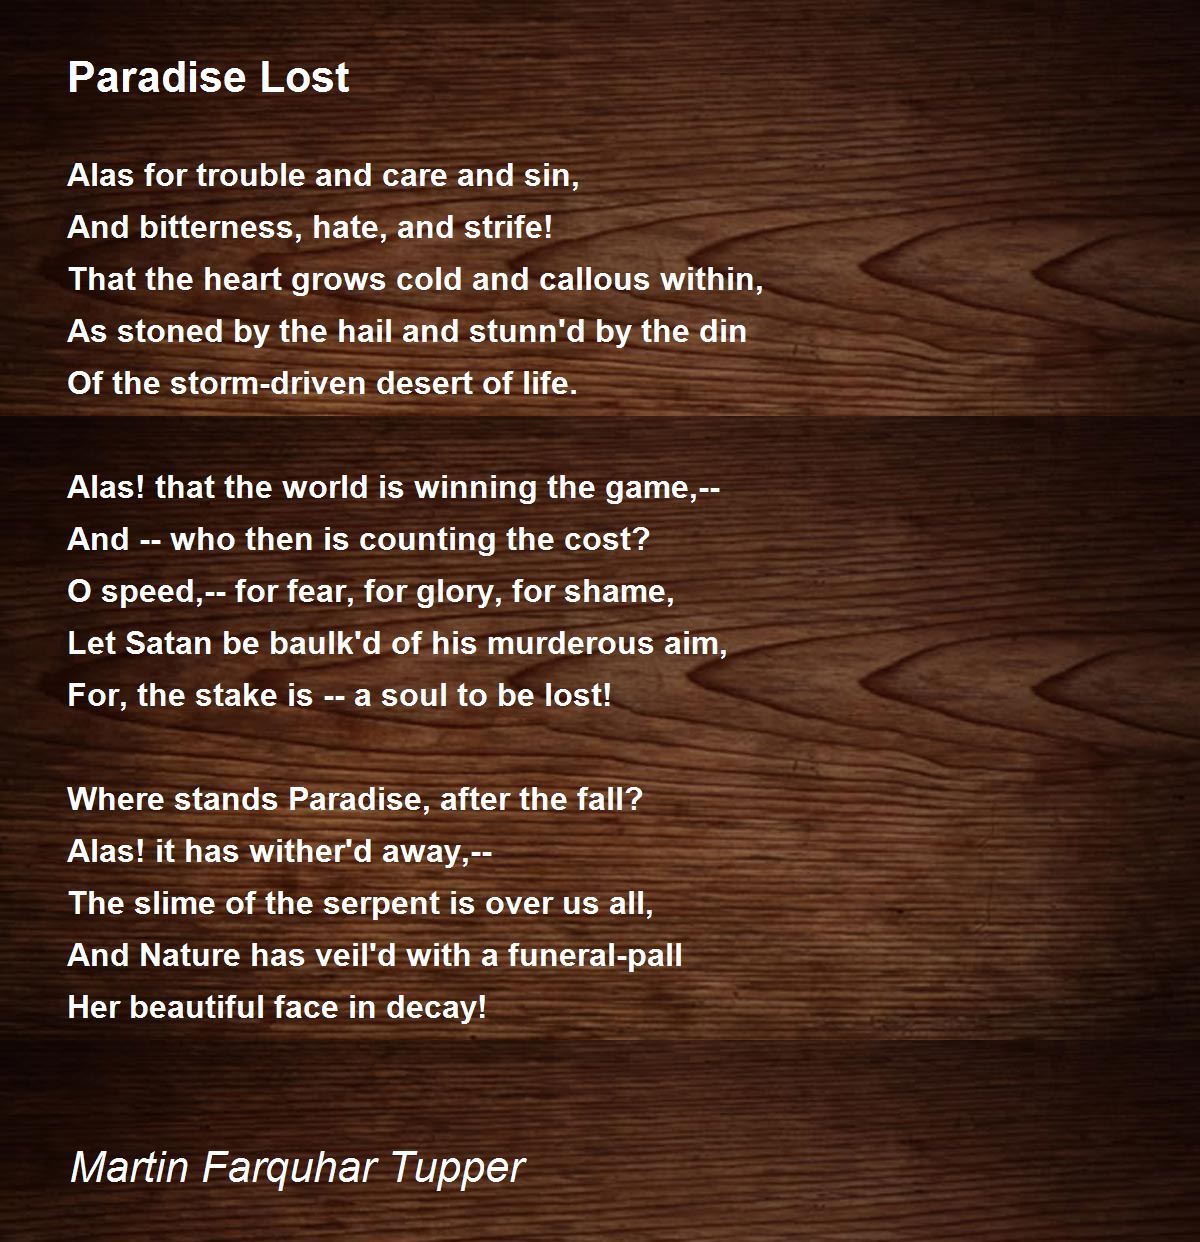 Pray Nightfall (tradução) - Paradise Lost - VAGALUME